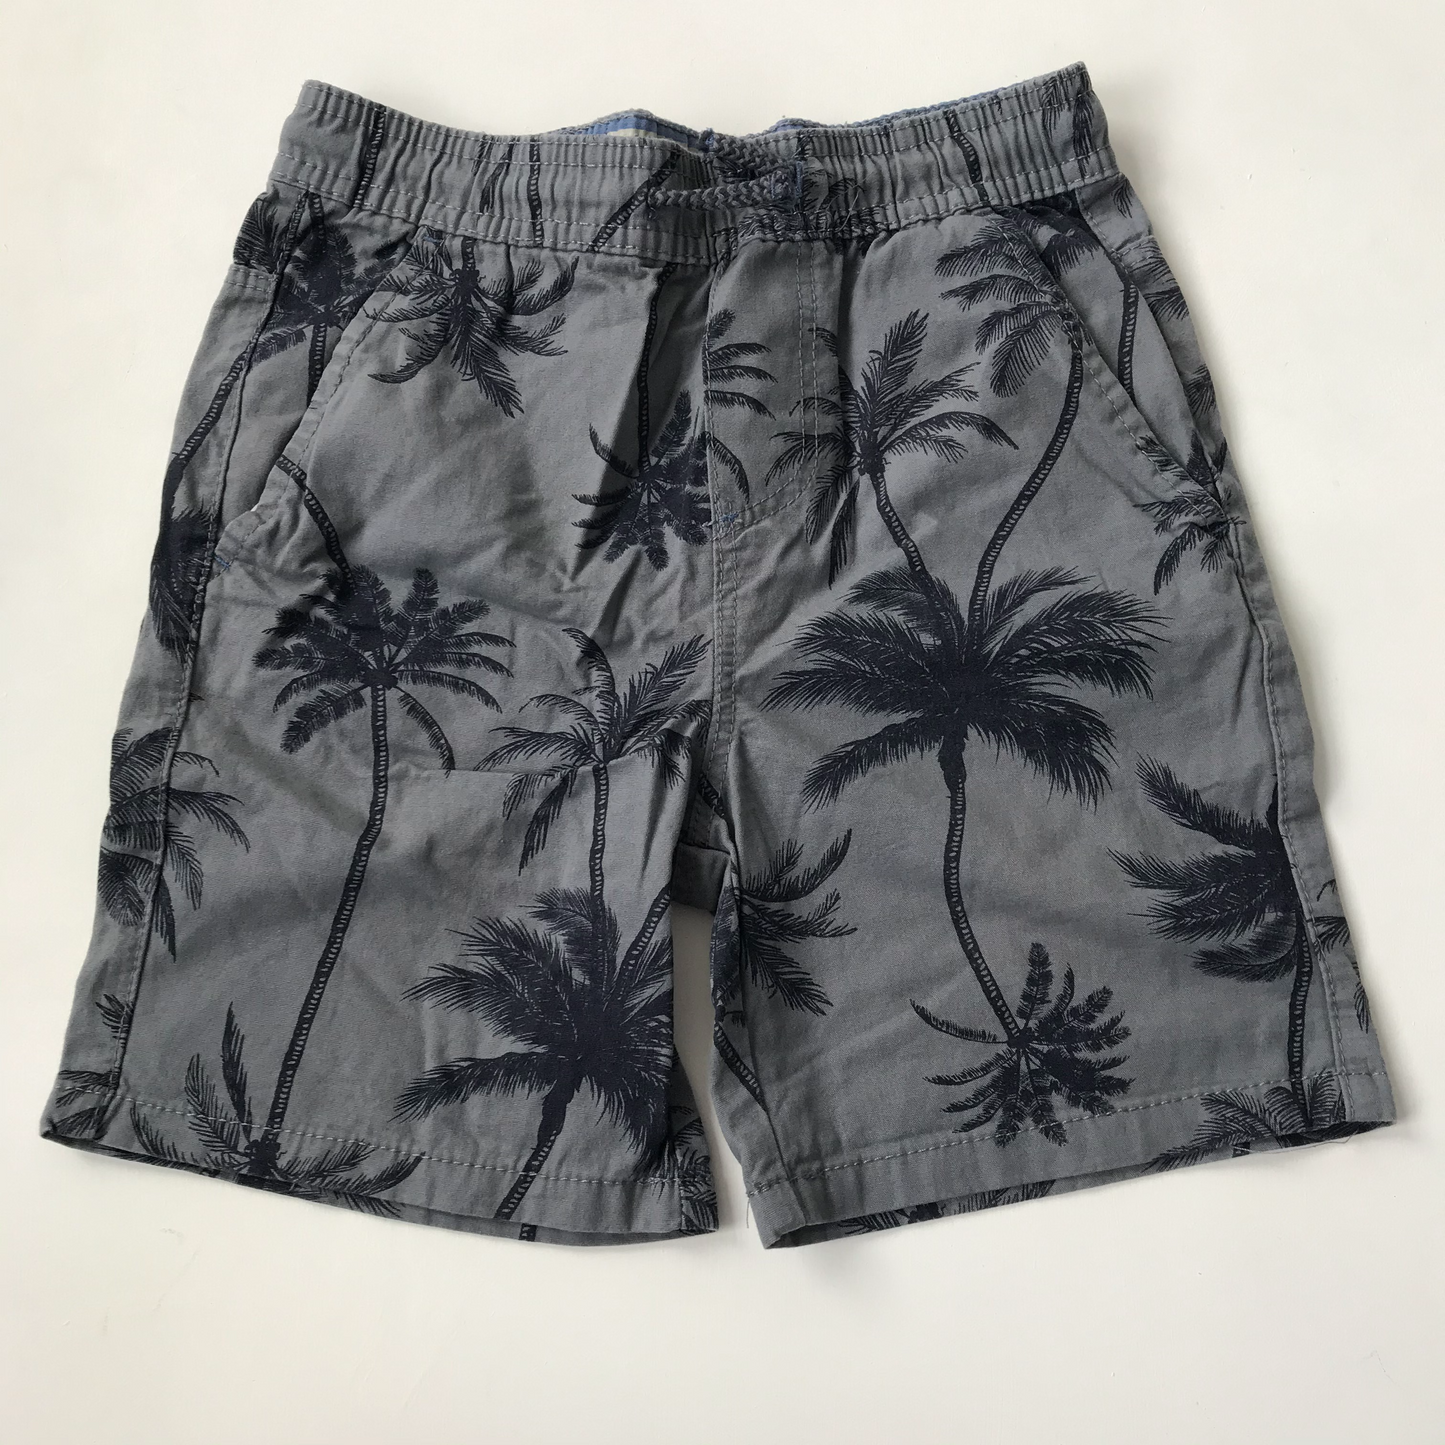 Shorts - Palm Trees - Age 6